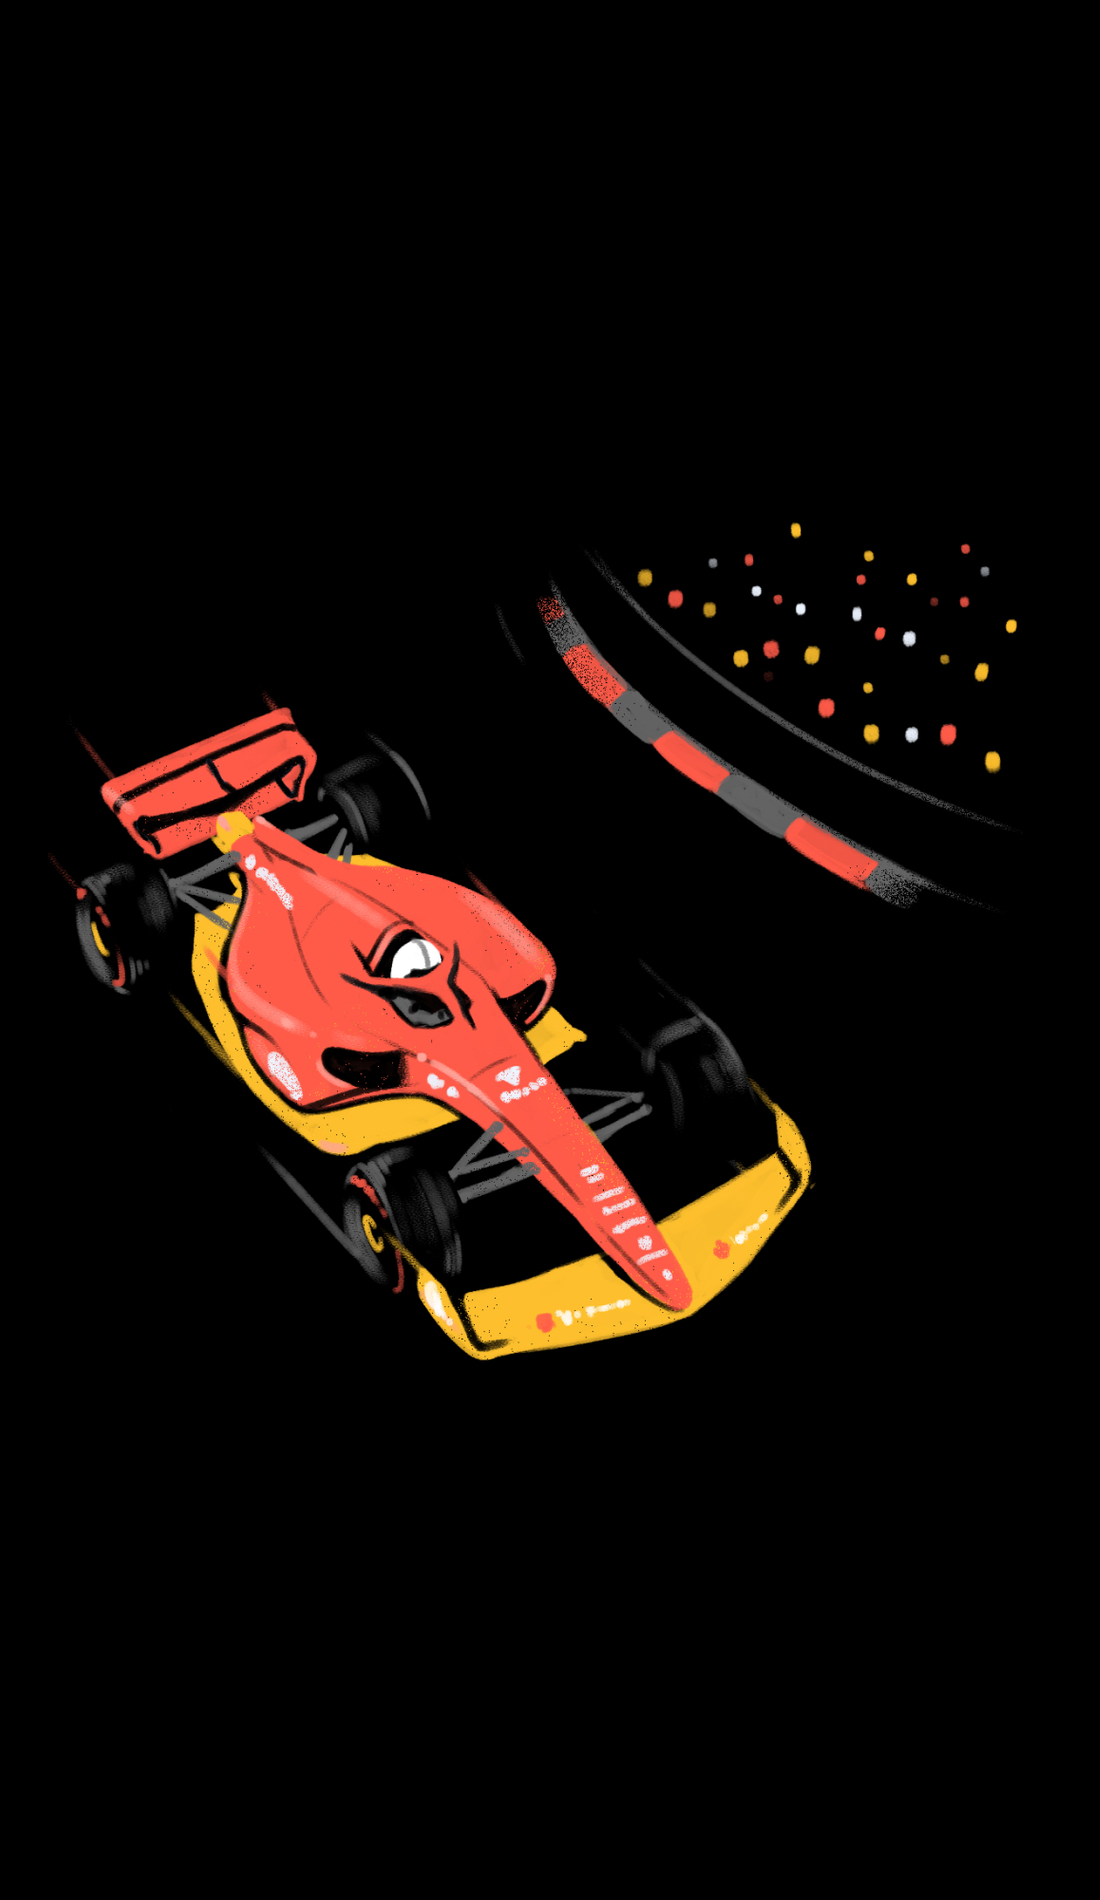 A Formula 1 Miami Grand Prix live event